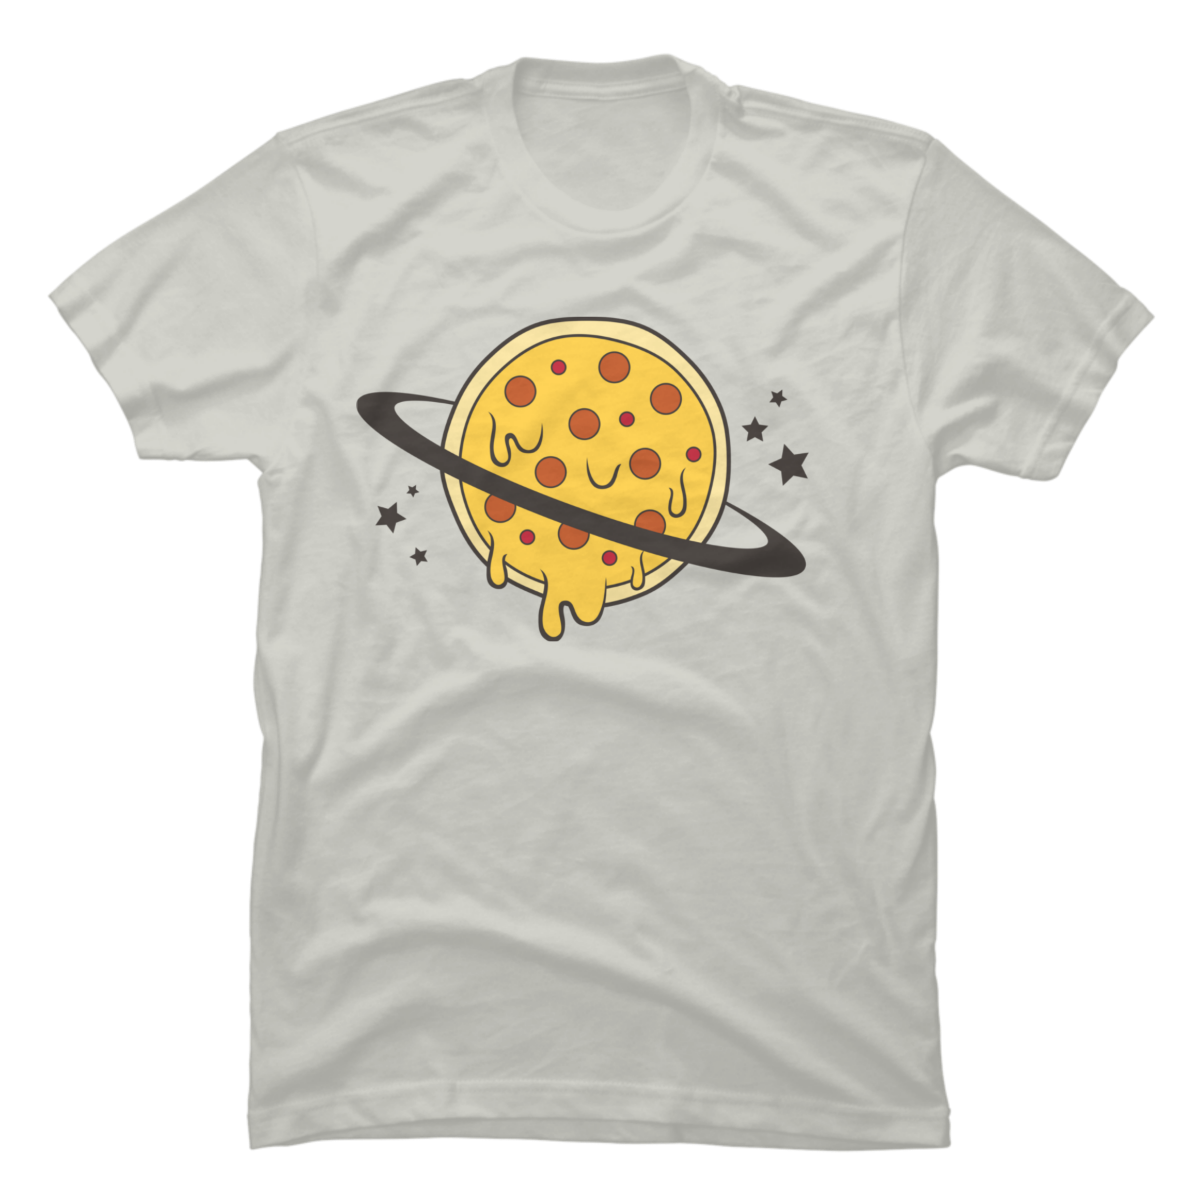 planet pizza shirt